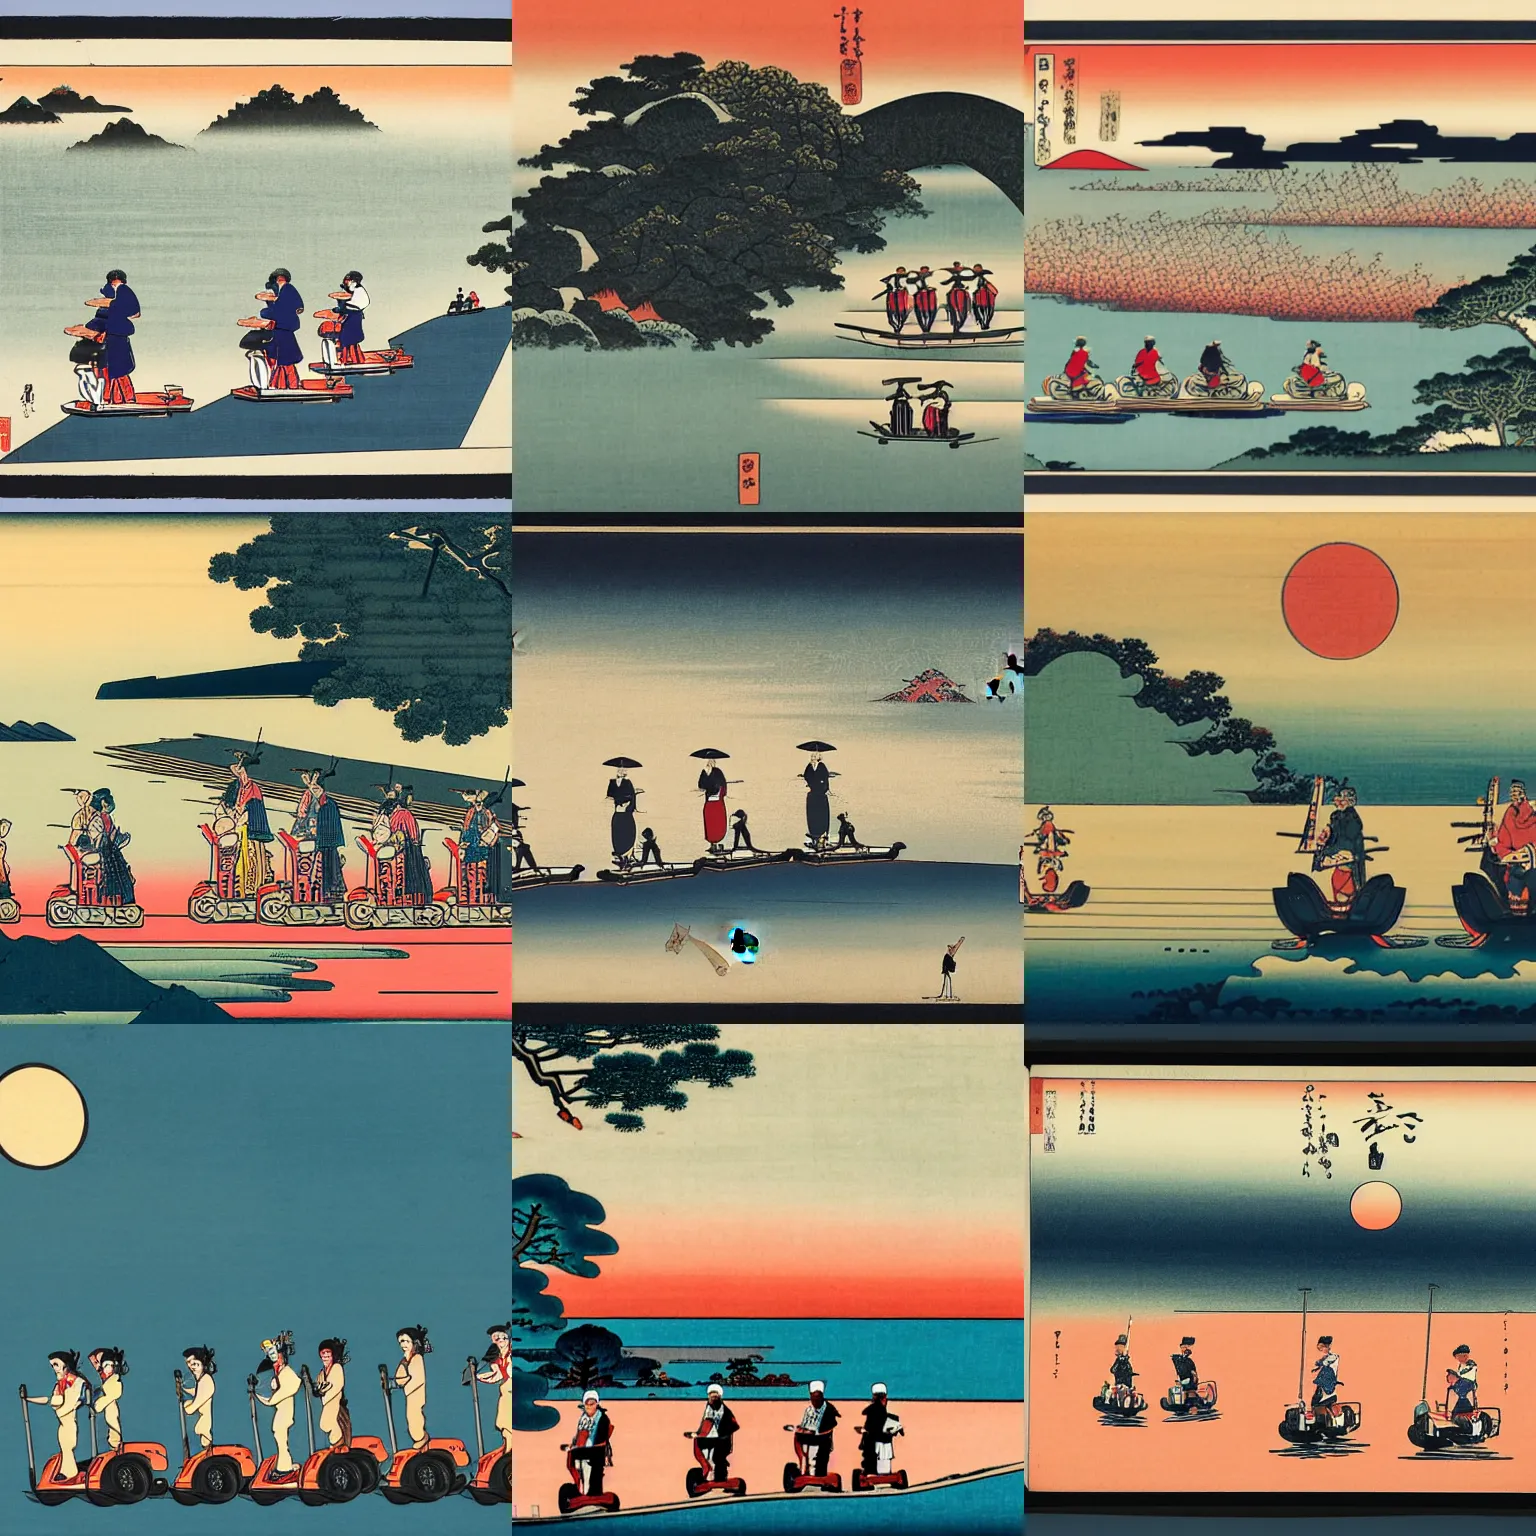 Prompt: Group of tourists riding on segways into the sunset, style of ukiyo-e hokusai